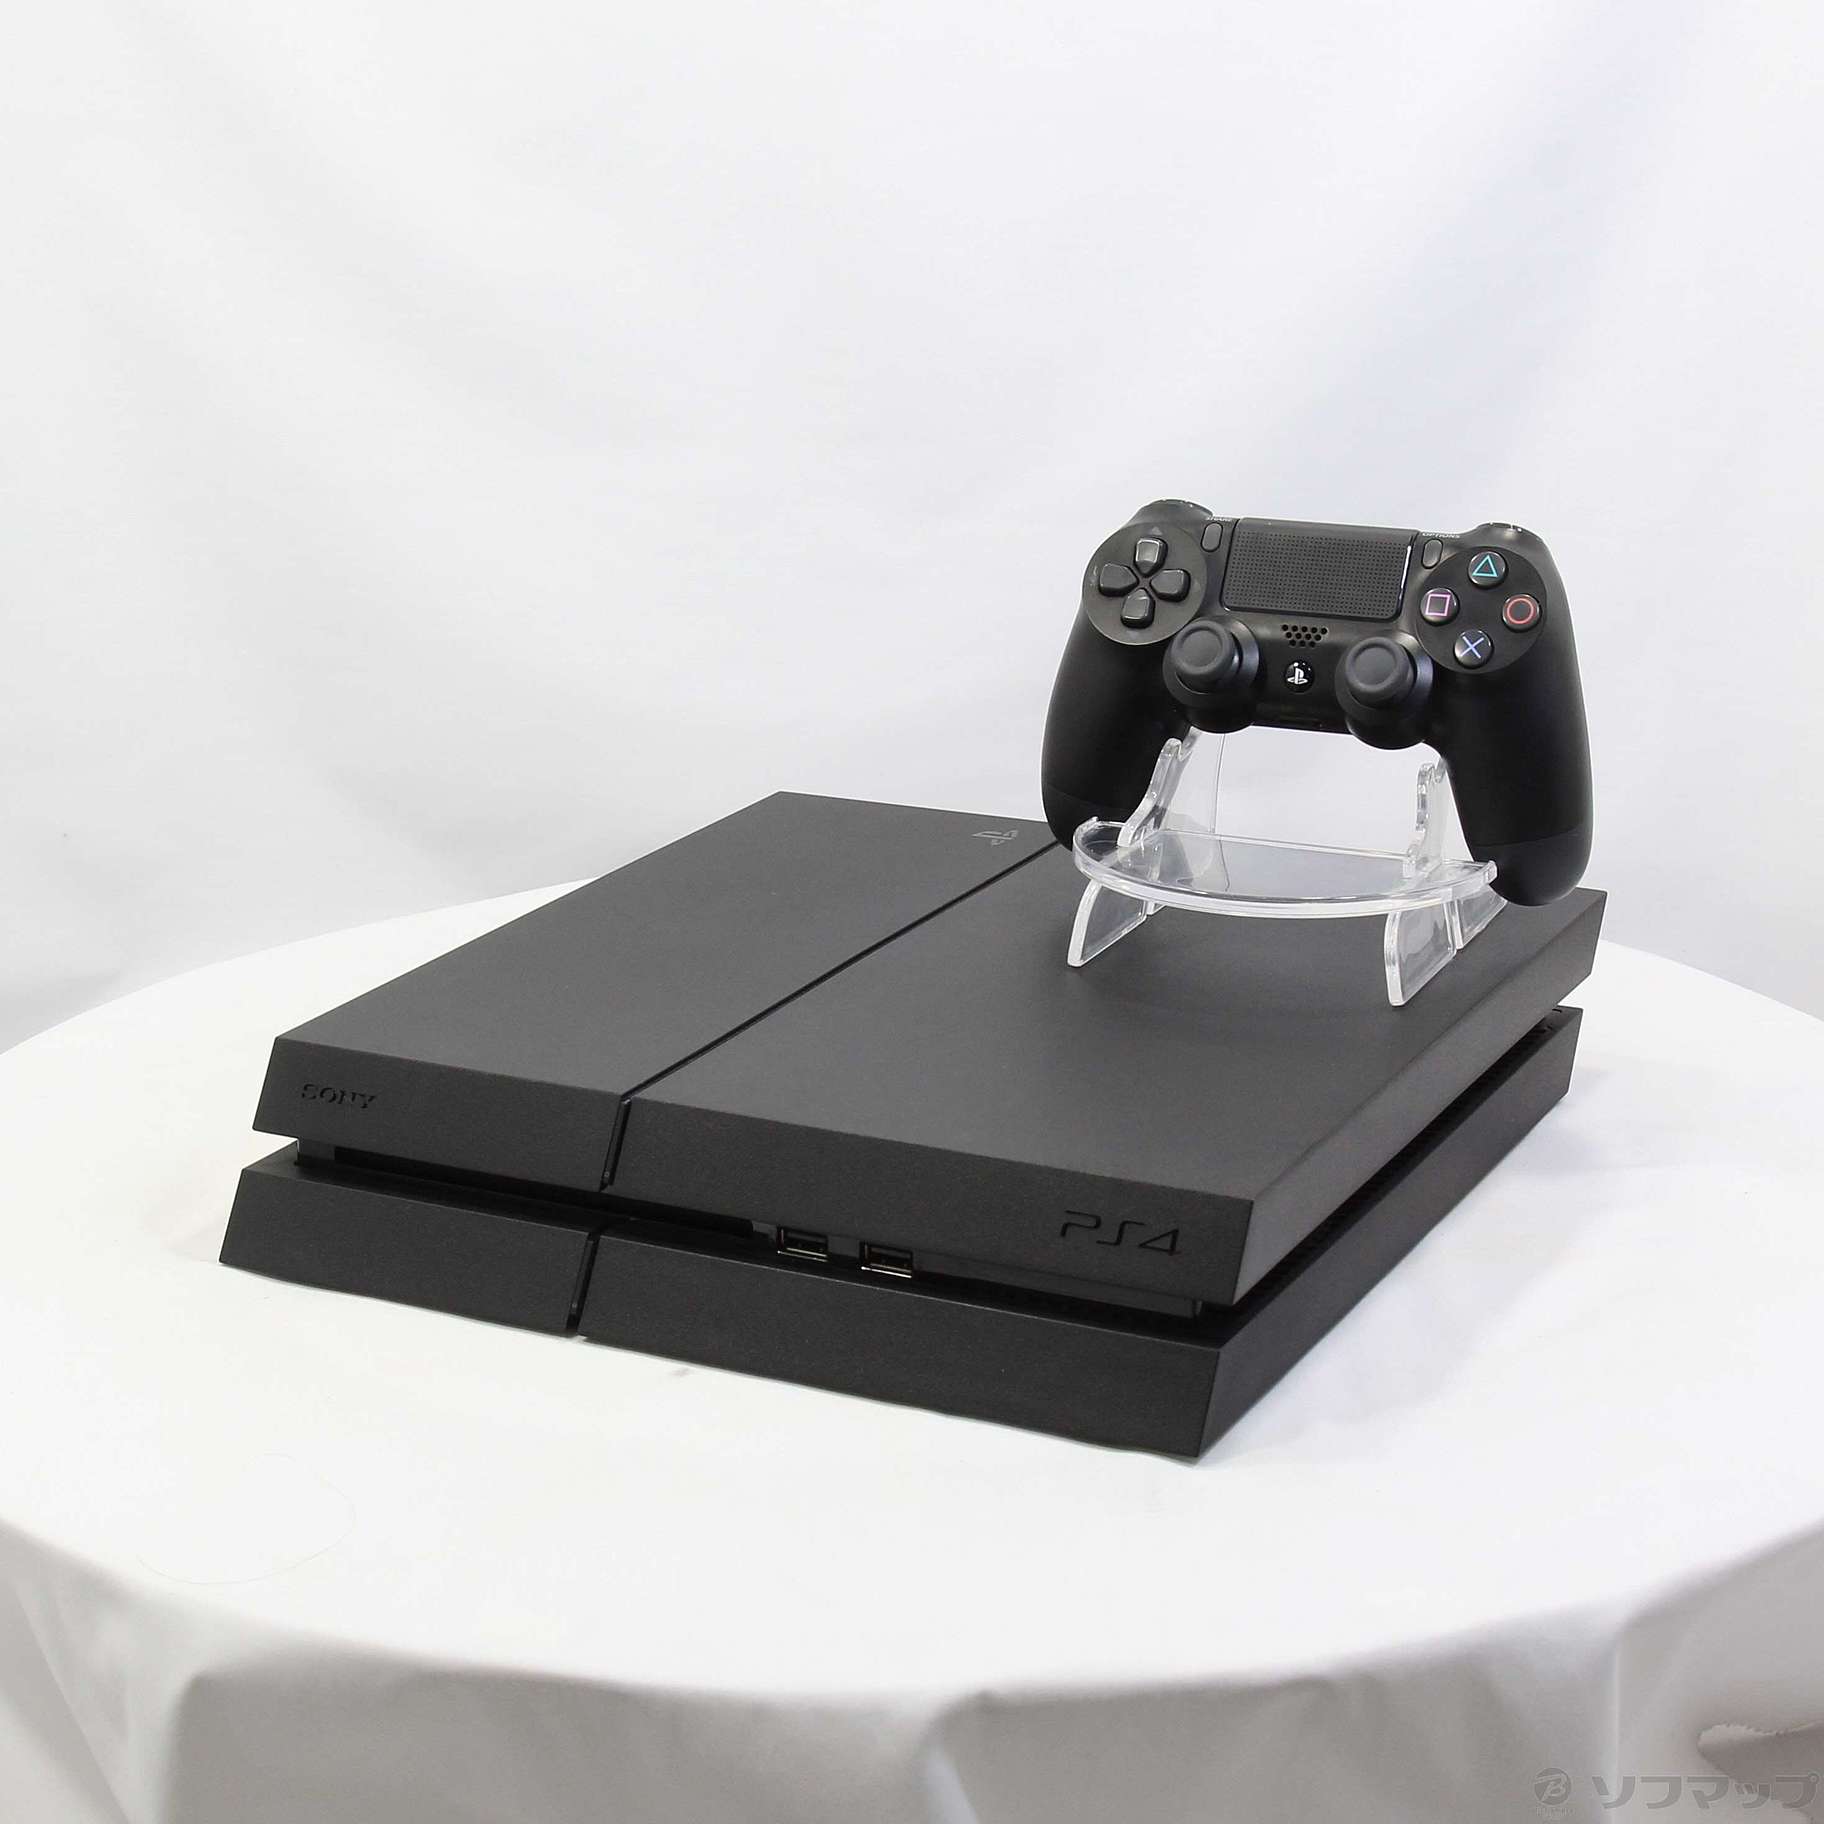 PlayStation 4 ジェットブラック CUH-1200AB tic-guinee.net